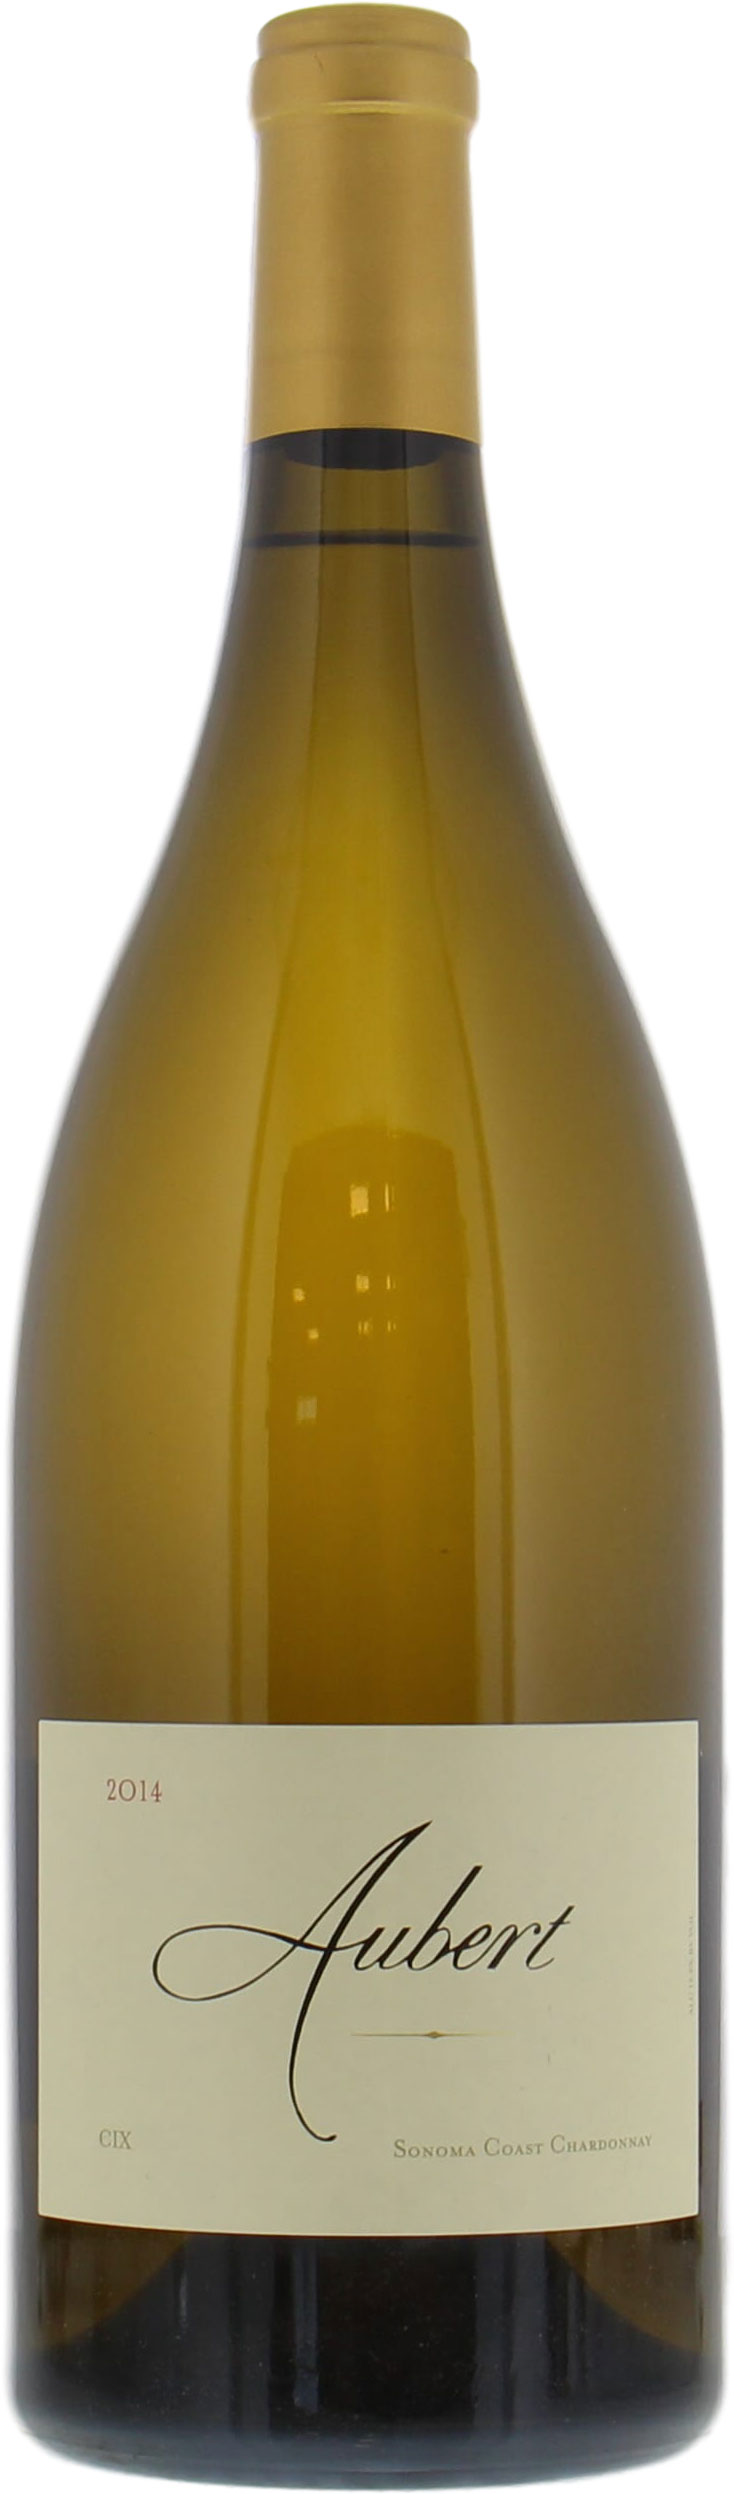 Aubert - CIX Chardonnay 2014 Perfect